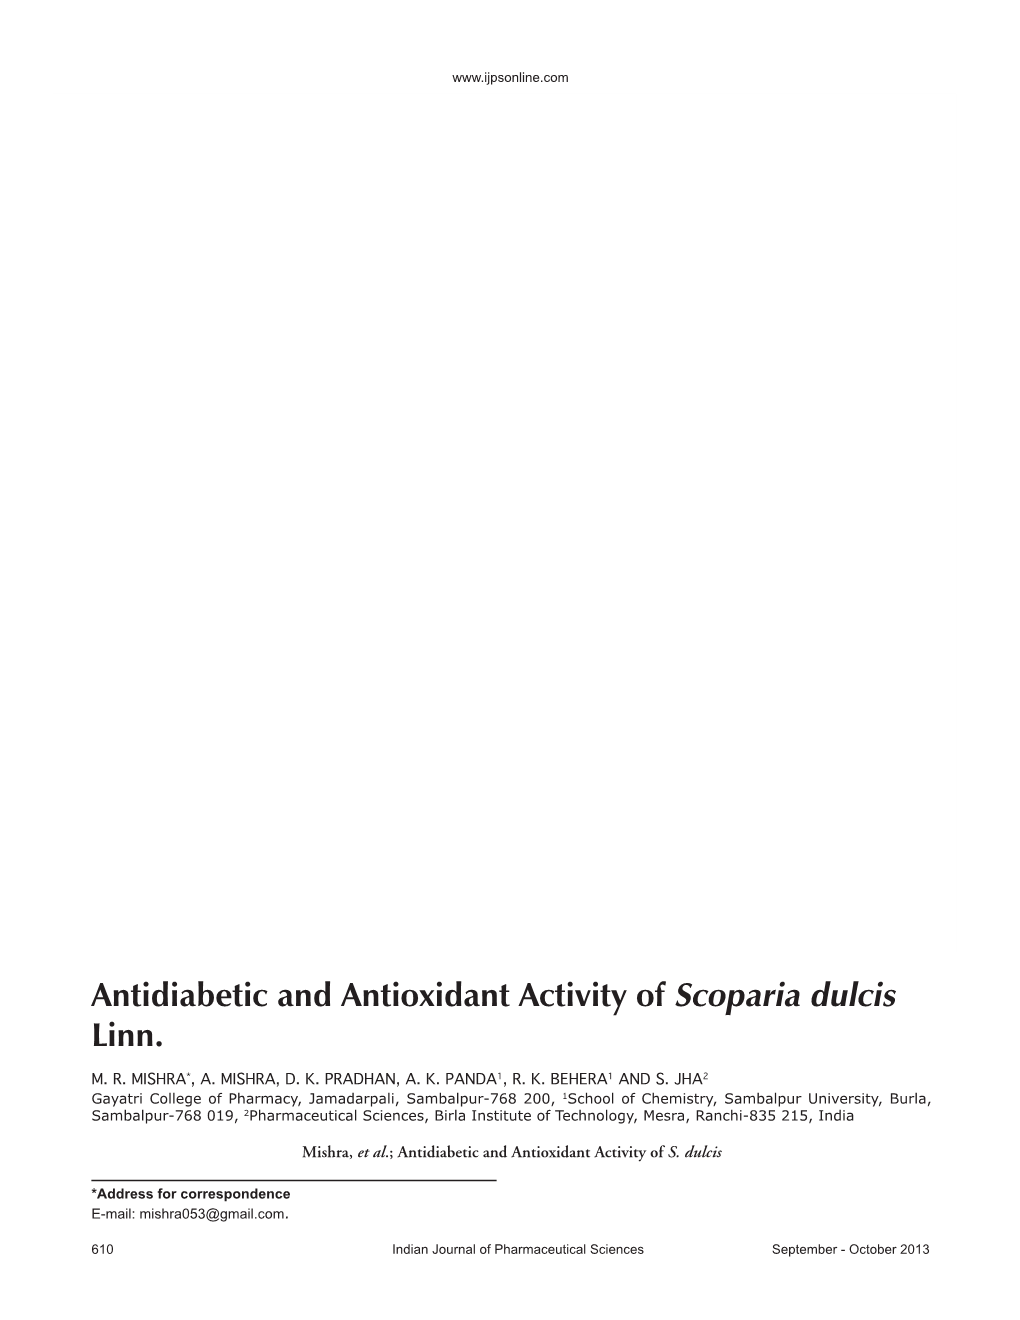 Antidiabetic and Antioxidant Activity of Scoparia Dulcis Linn